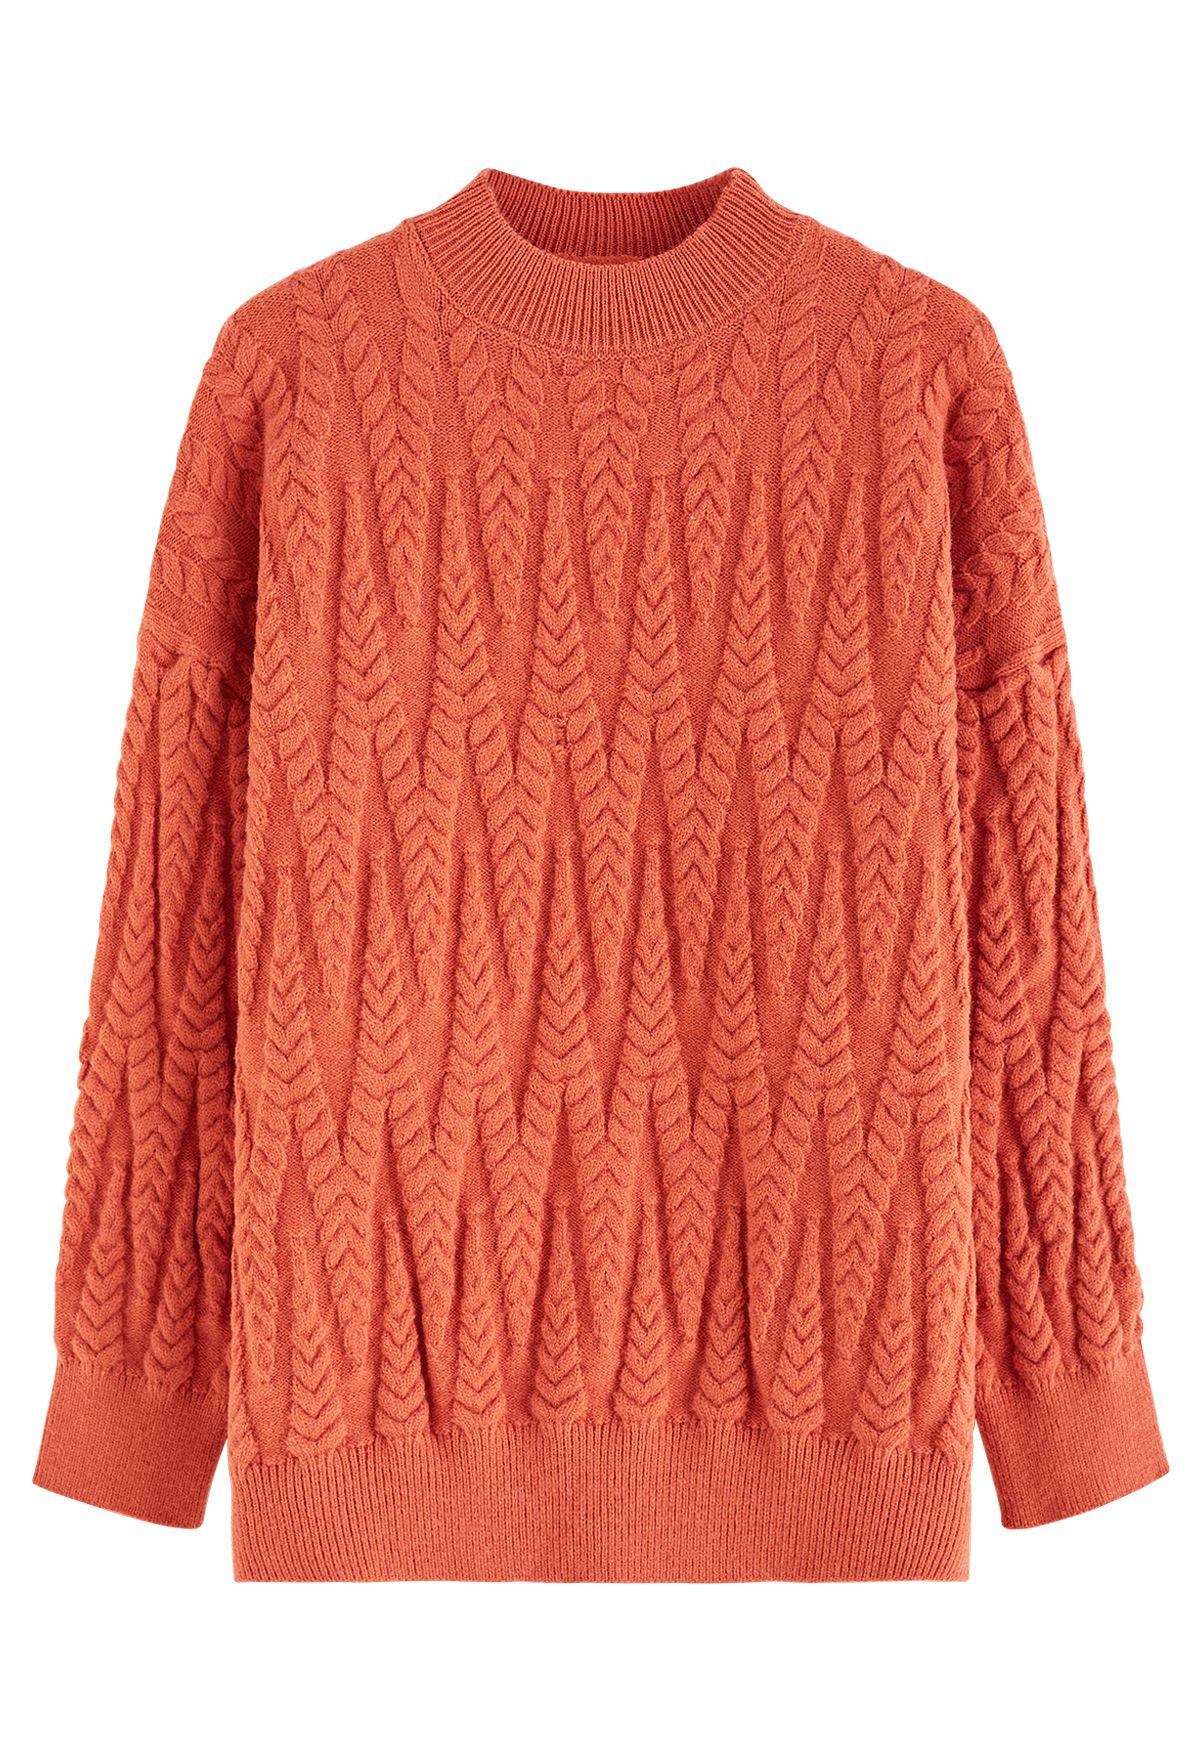 Zigzag Braided Chunky Knit Sweater in Pumpkin